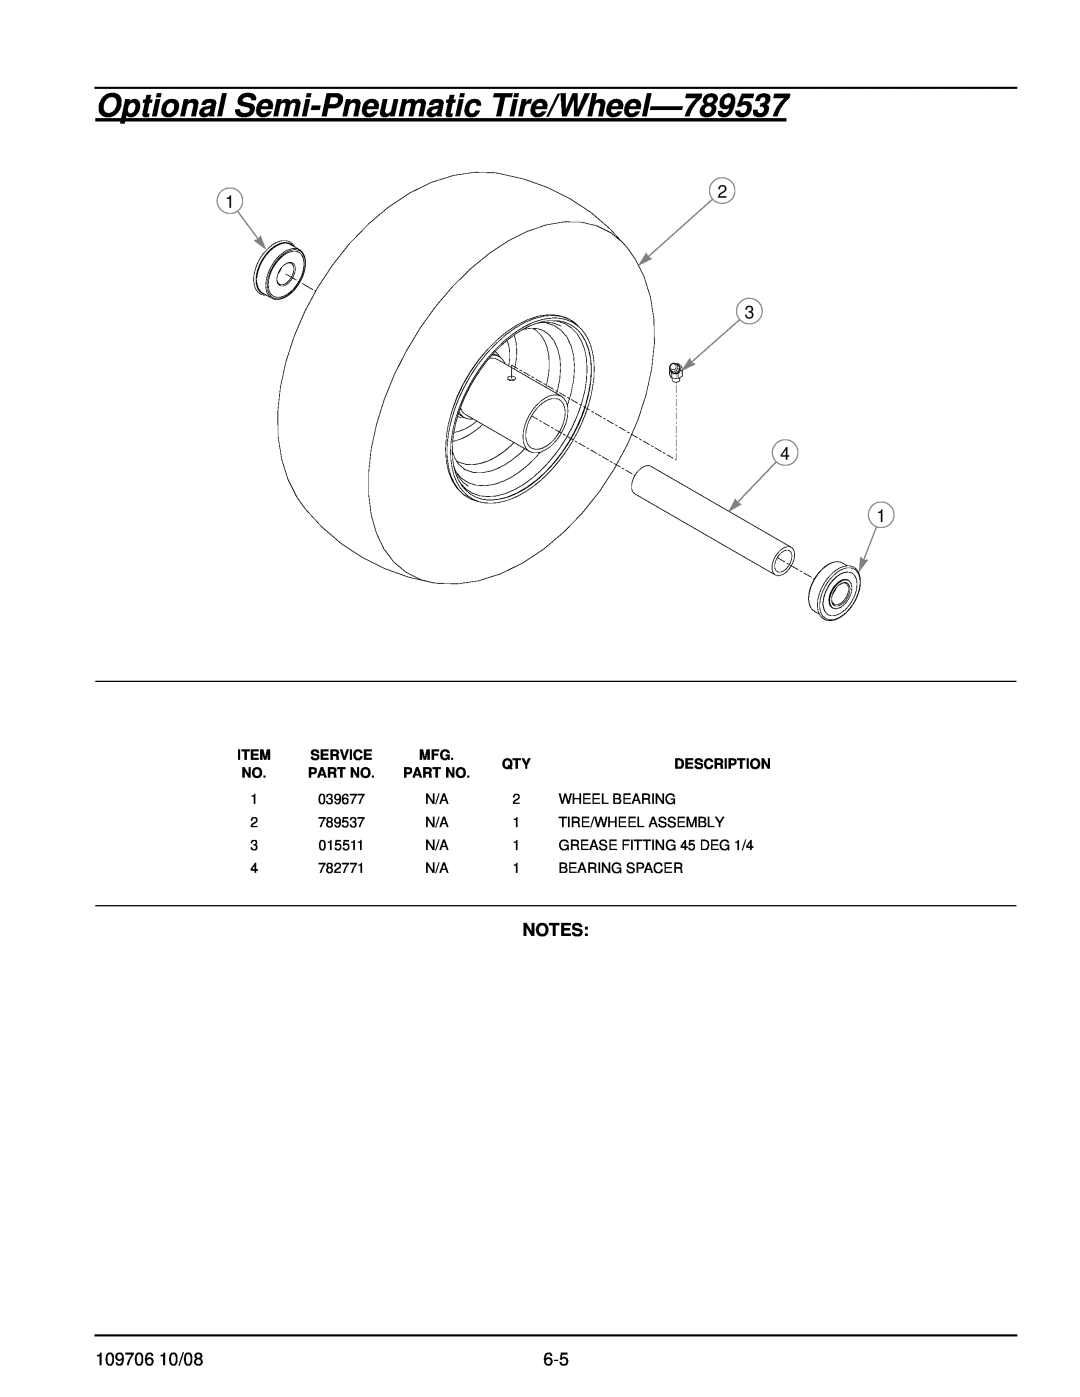 Hustler Turf Diesel Z manual Optional Semi-Pneumatic Tire/Wheel-789537, 109706 10/08, Service, Description 